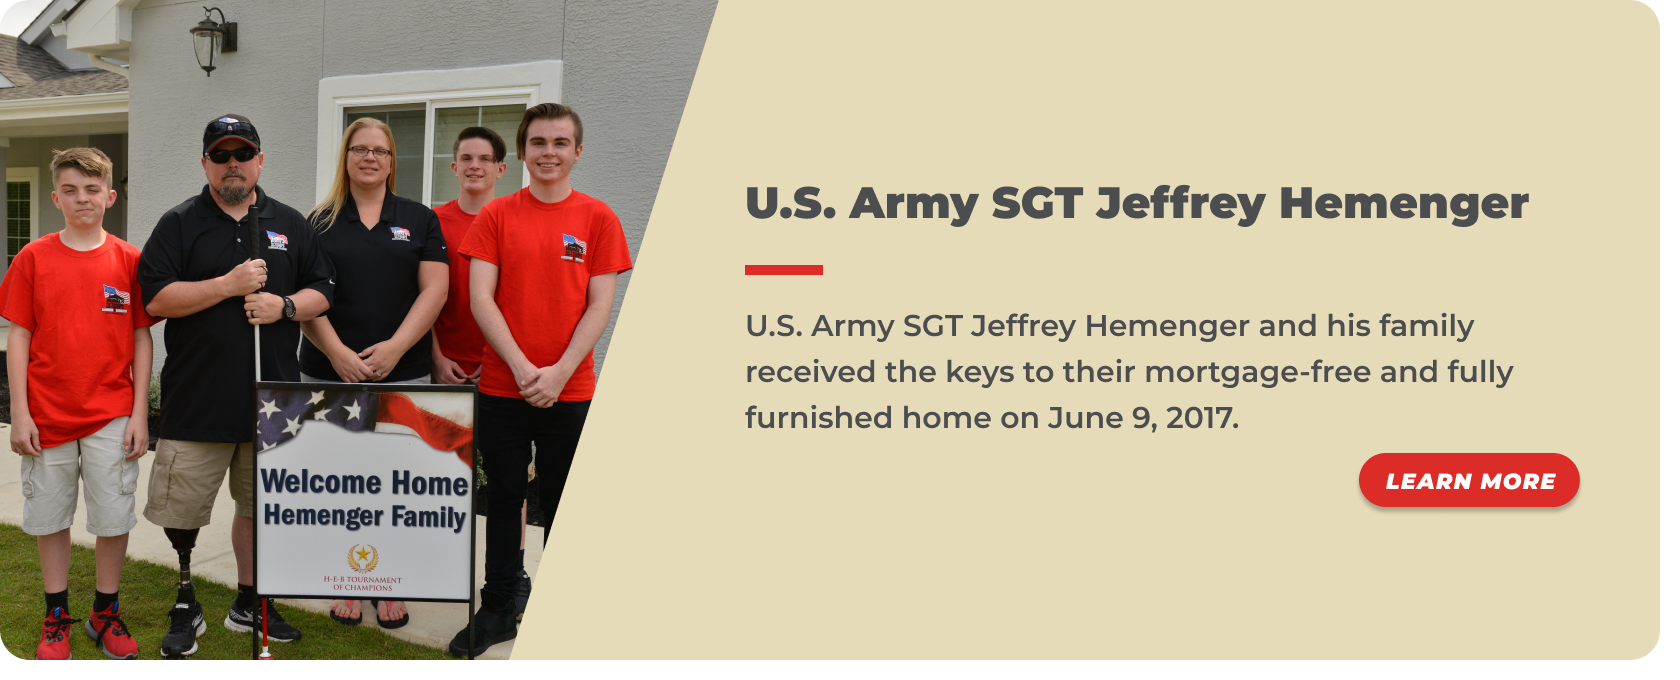 13 -U.S. Army SGT Jeffrey Hemenger